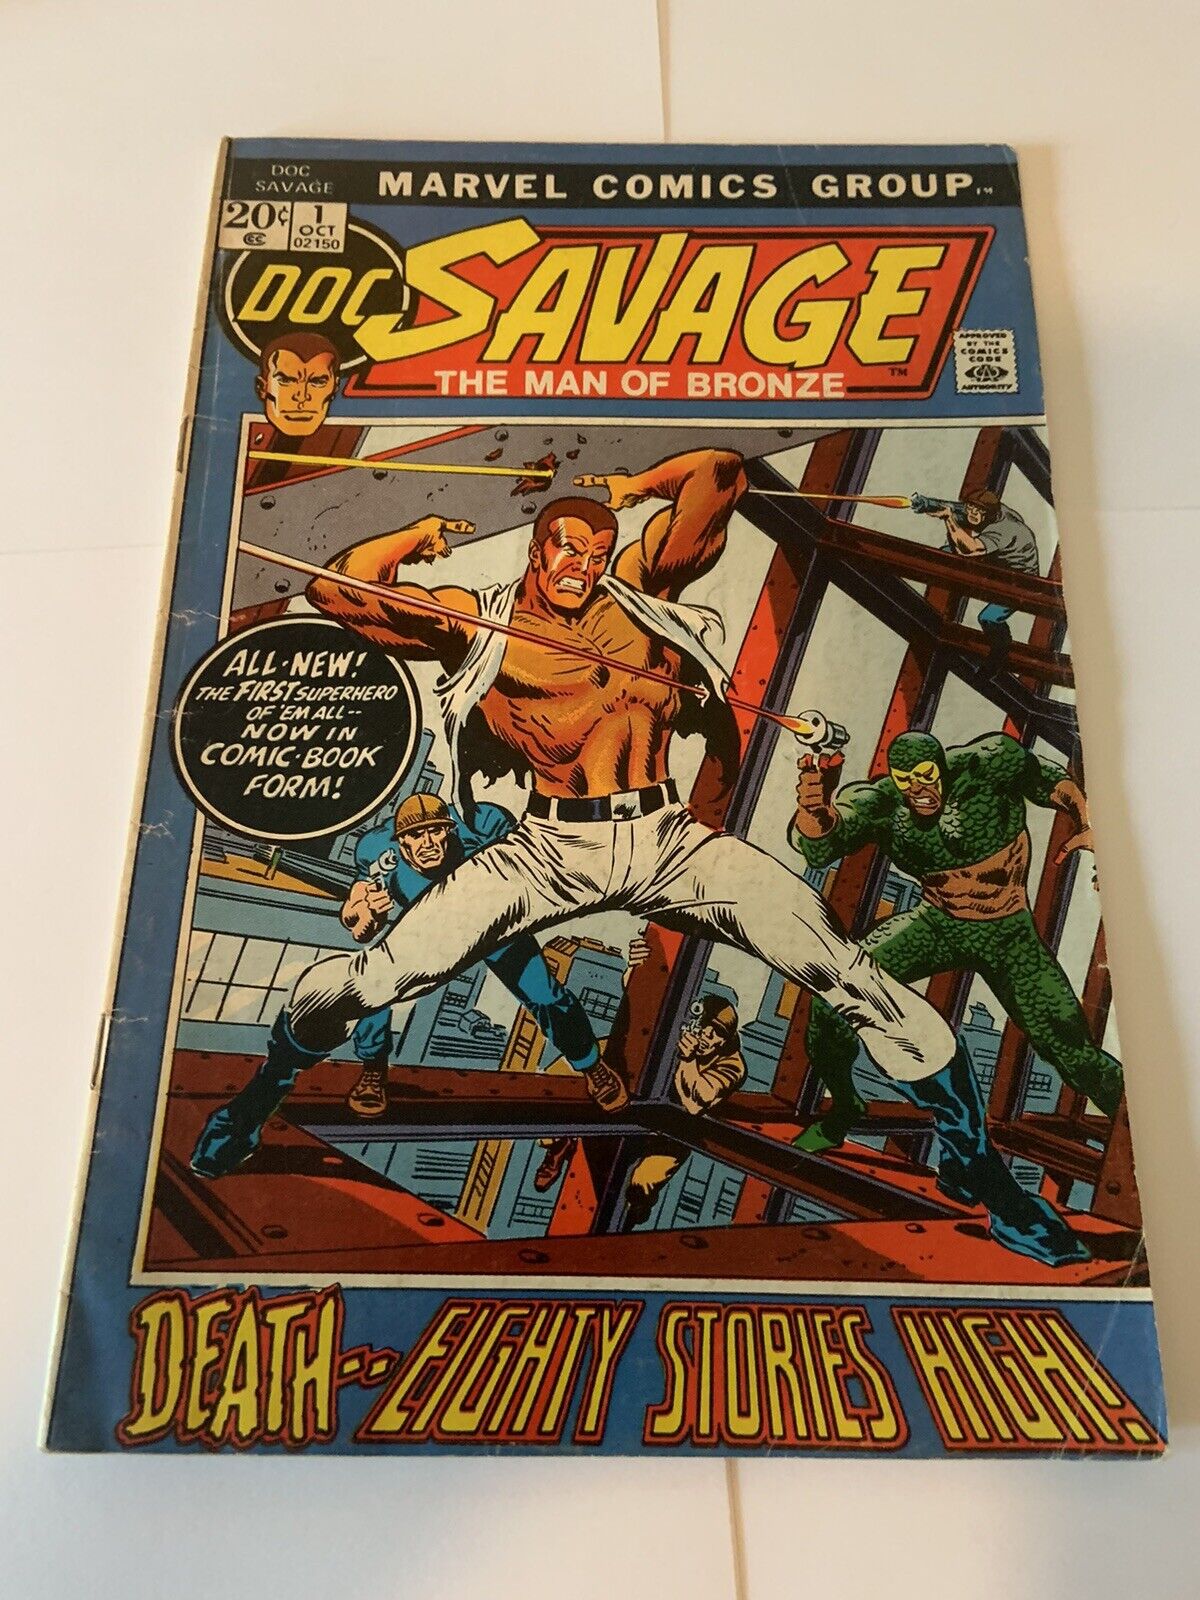 DOC SAVAGE Man of Bronze #1 October 1972 Vintage Marvel Comics Low Condition